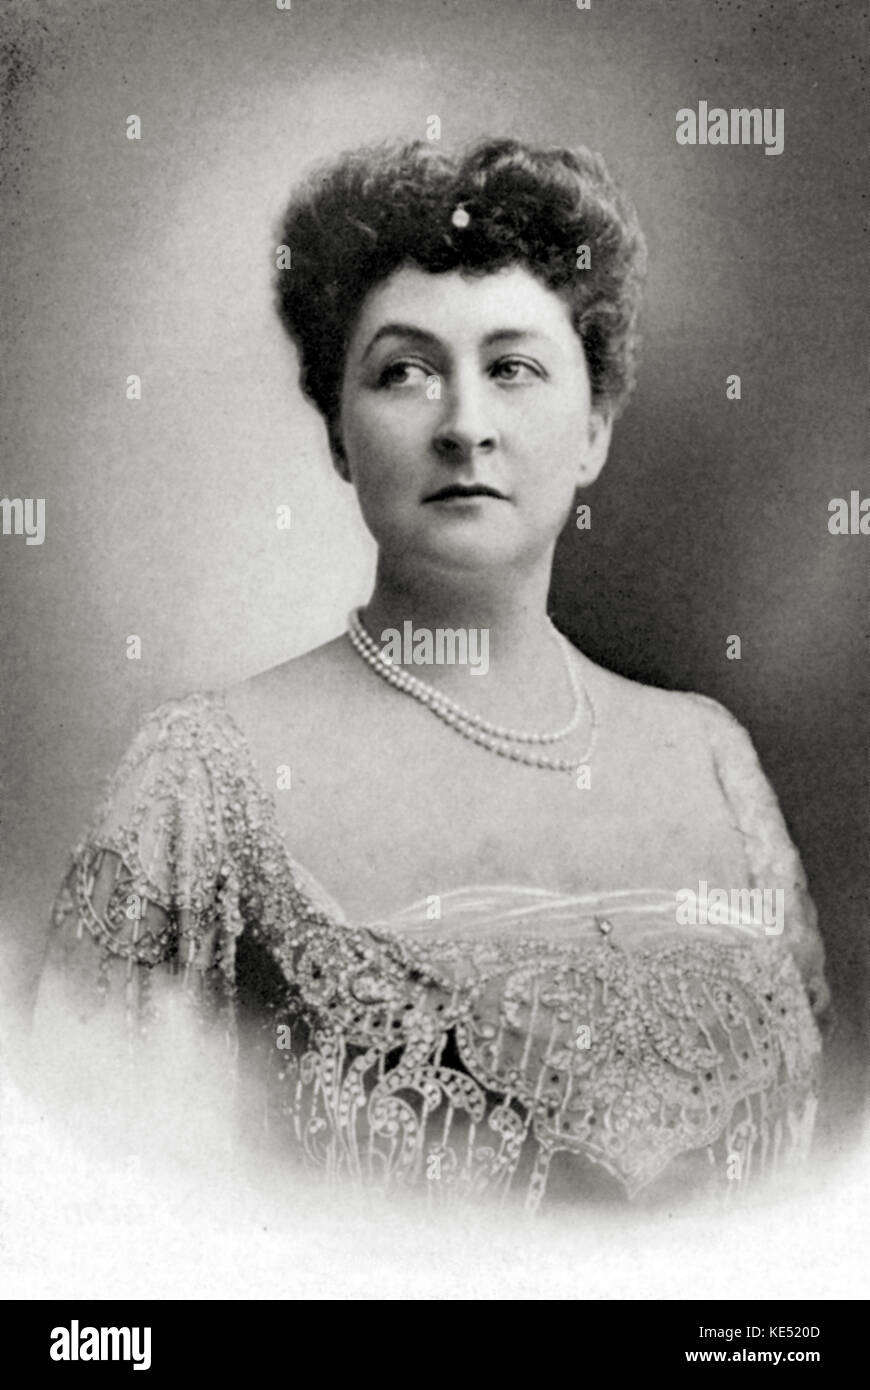 Emma Eames, portrait. American opera soprano. 13 August 1865 - 13 June 1952. Married painter Julian Story, then baritone Emilio di Gigorza. Stock Photo